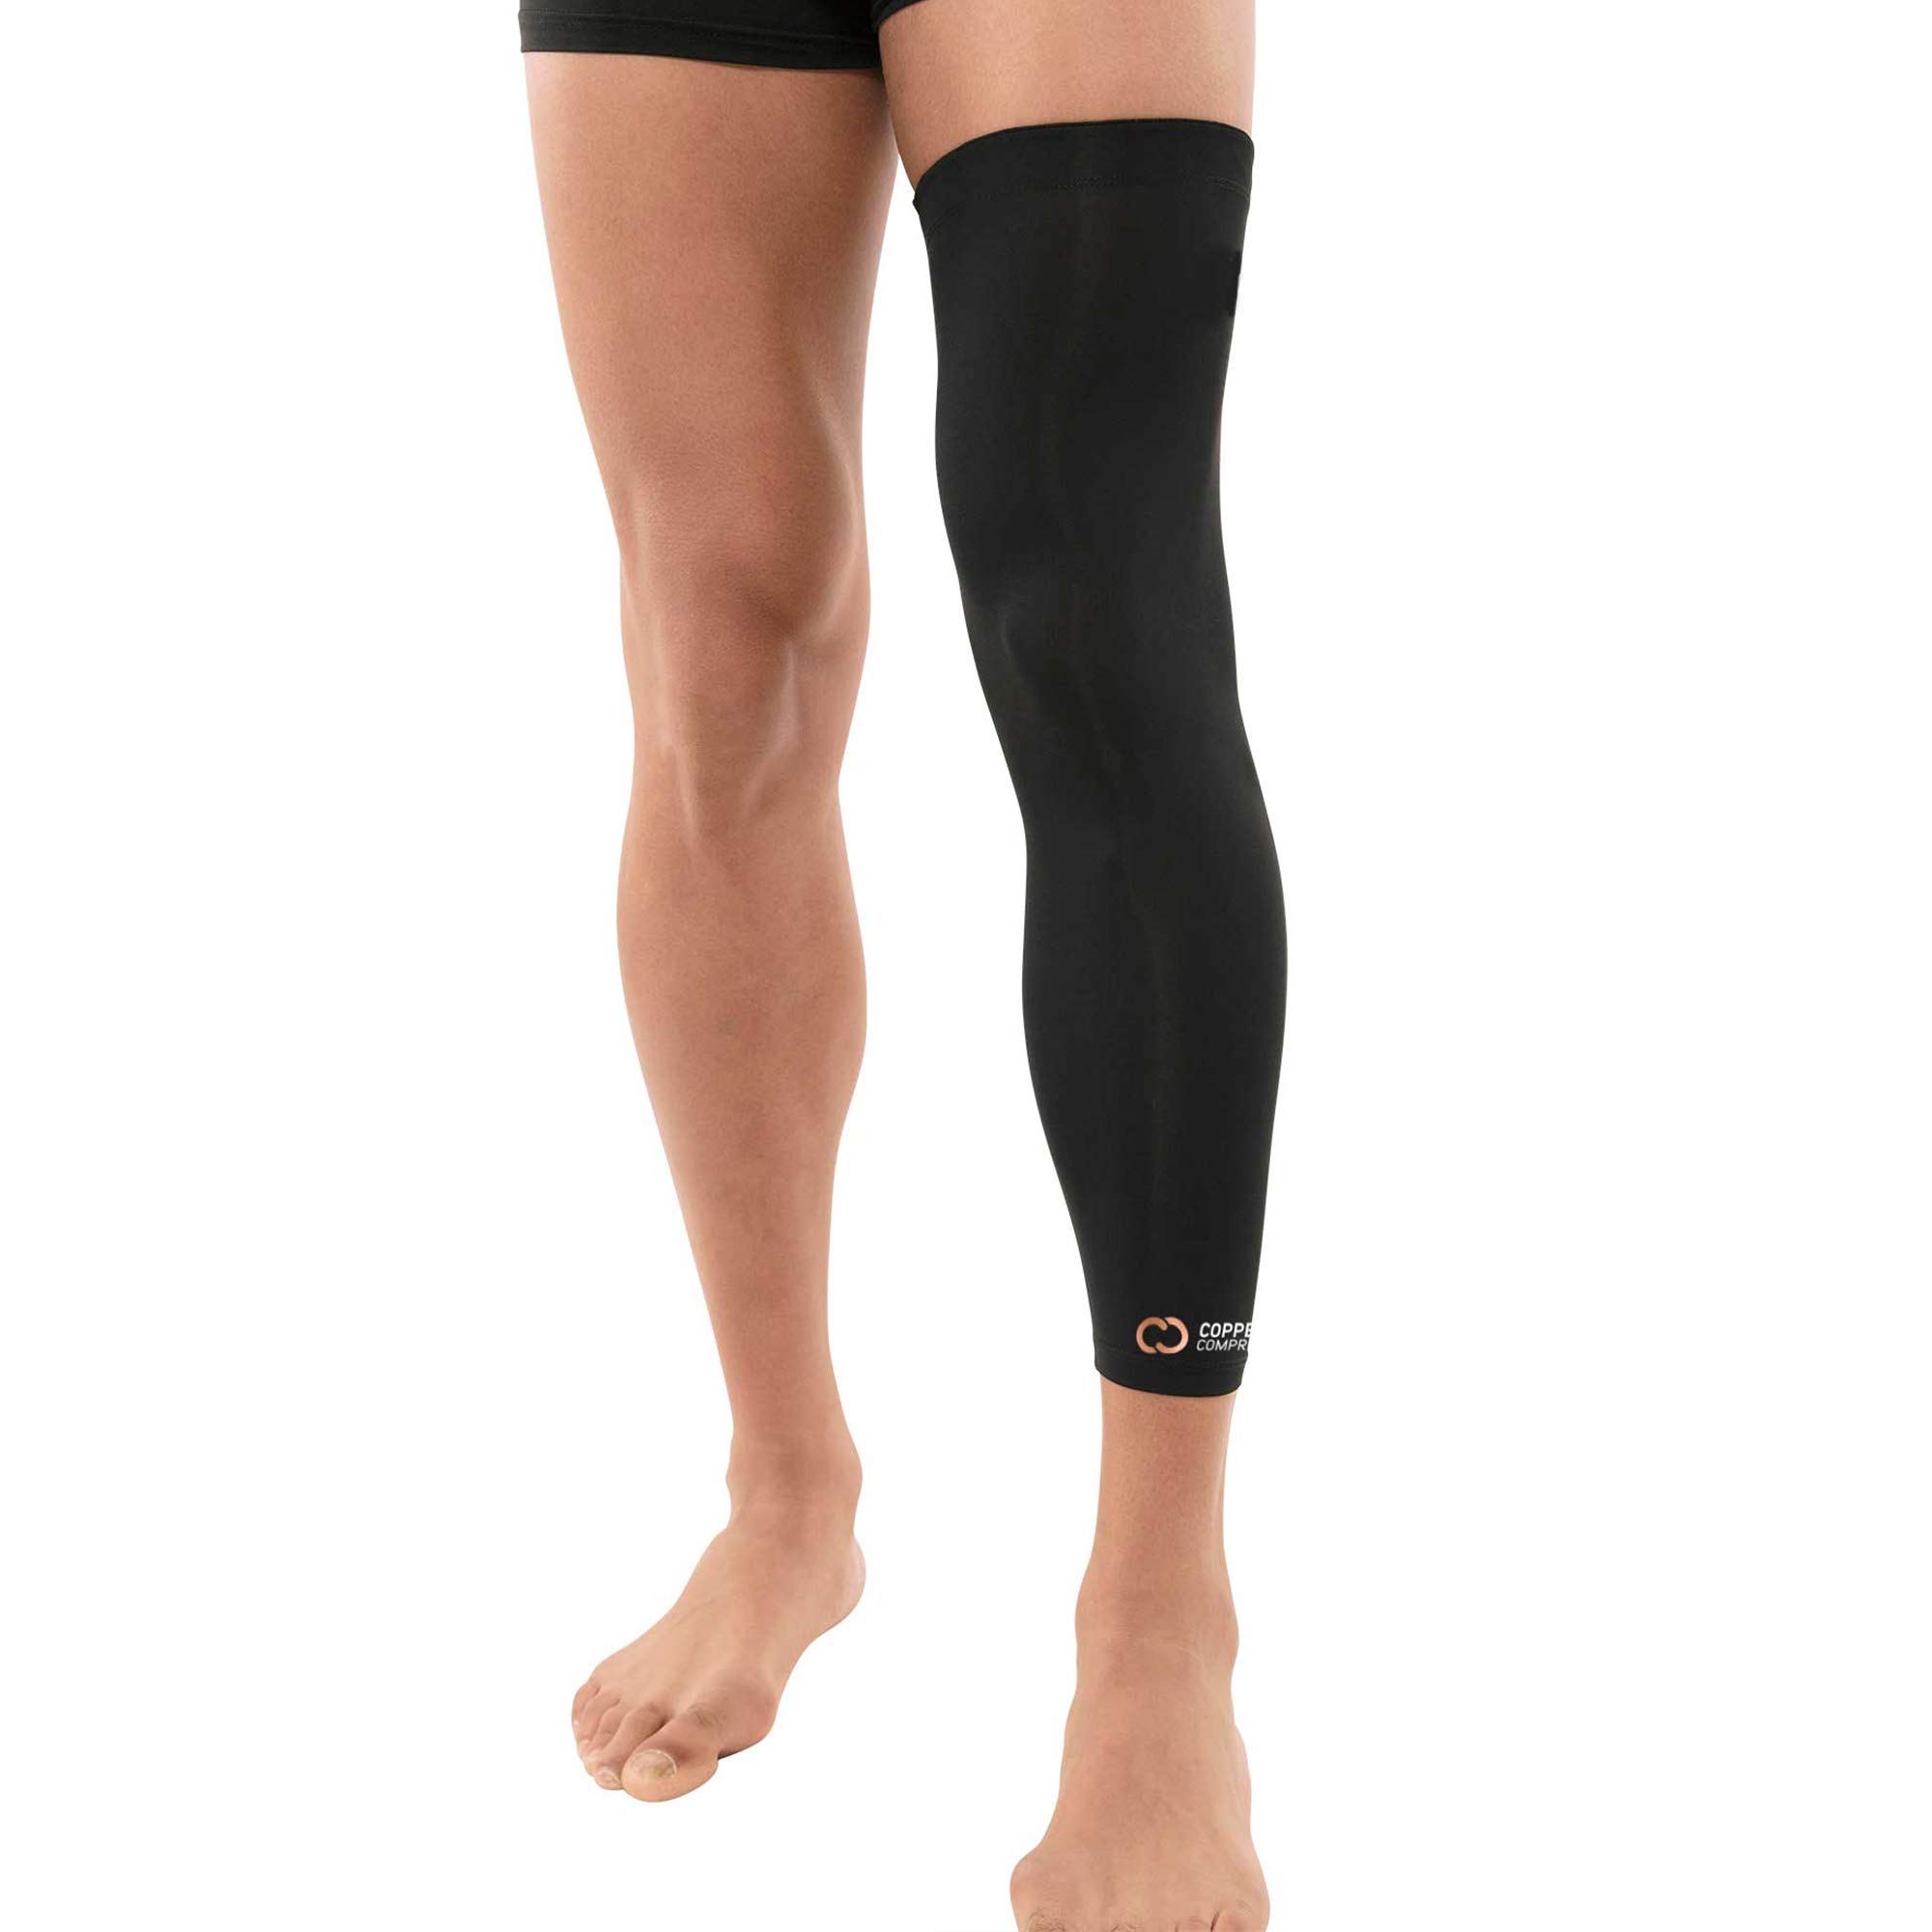 Copper-Infused Full Leg Sleeve - Left or Right Leg w/ Unisex Fit